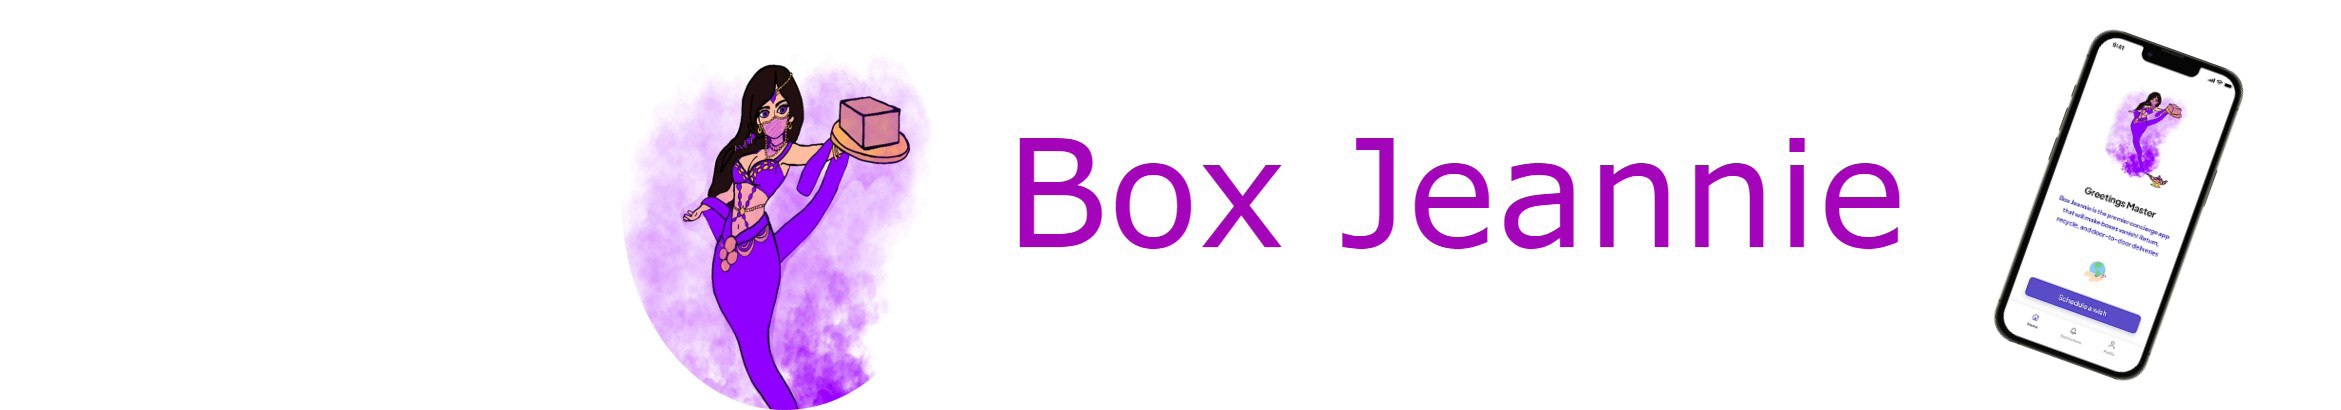 Box Jeannie's profile banner